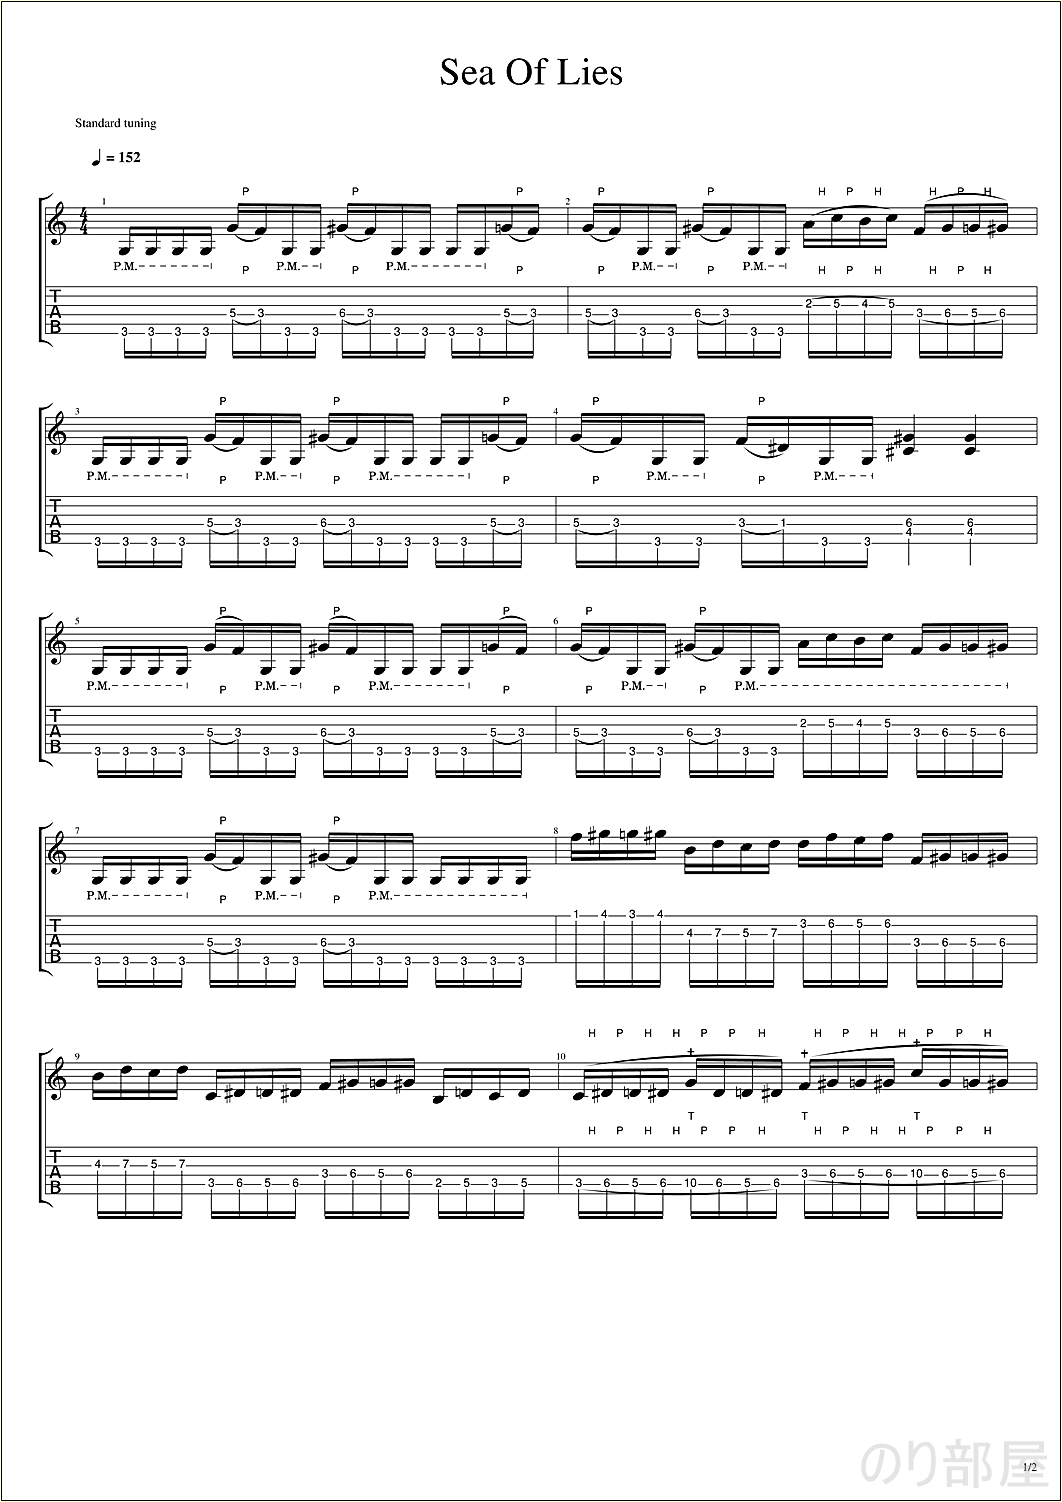 【TAB】Whole Tone Down.1音下げのTAB【TAB】Sea Of Lies / Symphony X  Intro Guitar Michael Romeo シンフォニーX マイケルロメオ ギター基礎練習 BPM70-152【Picking･Tapping】